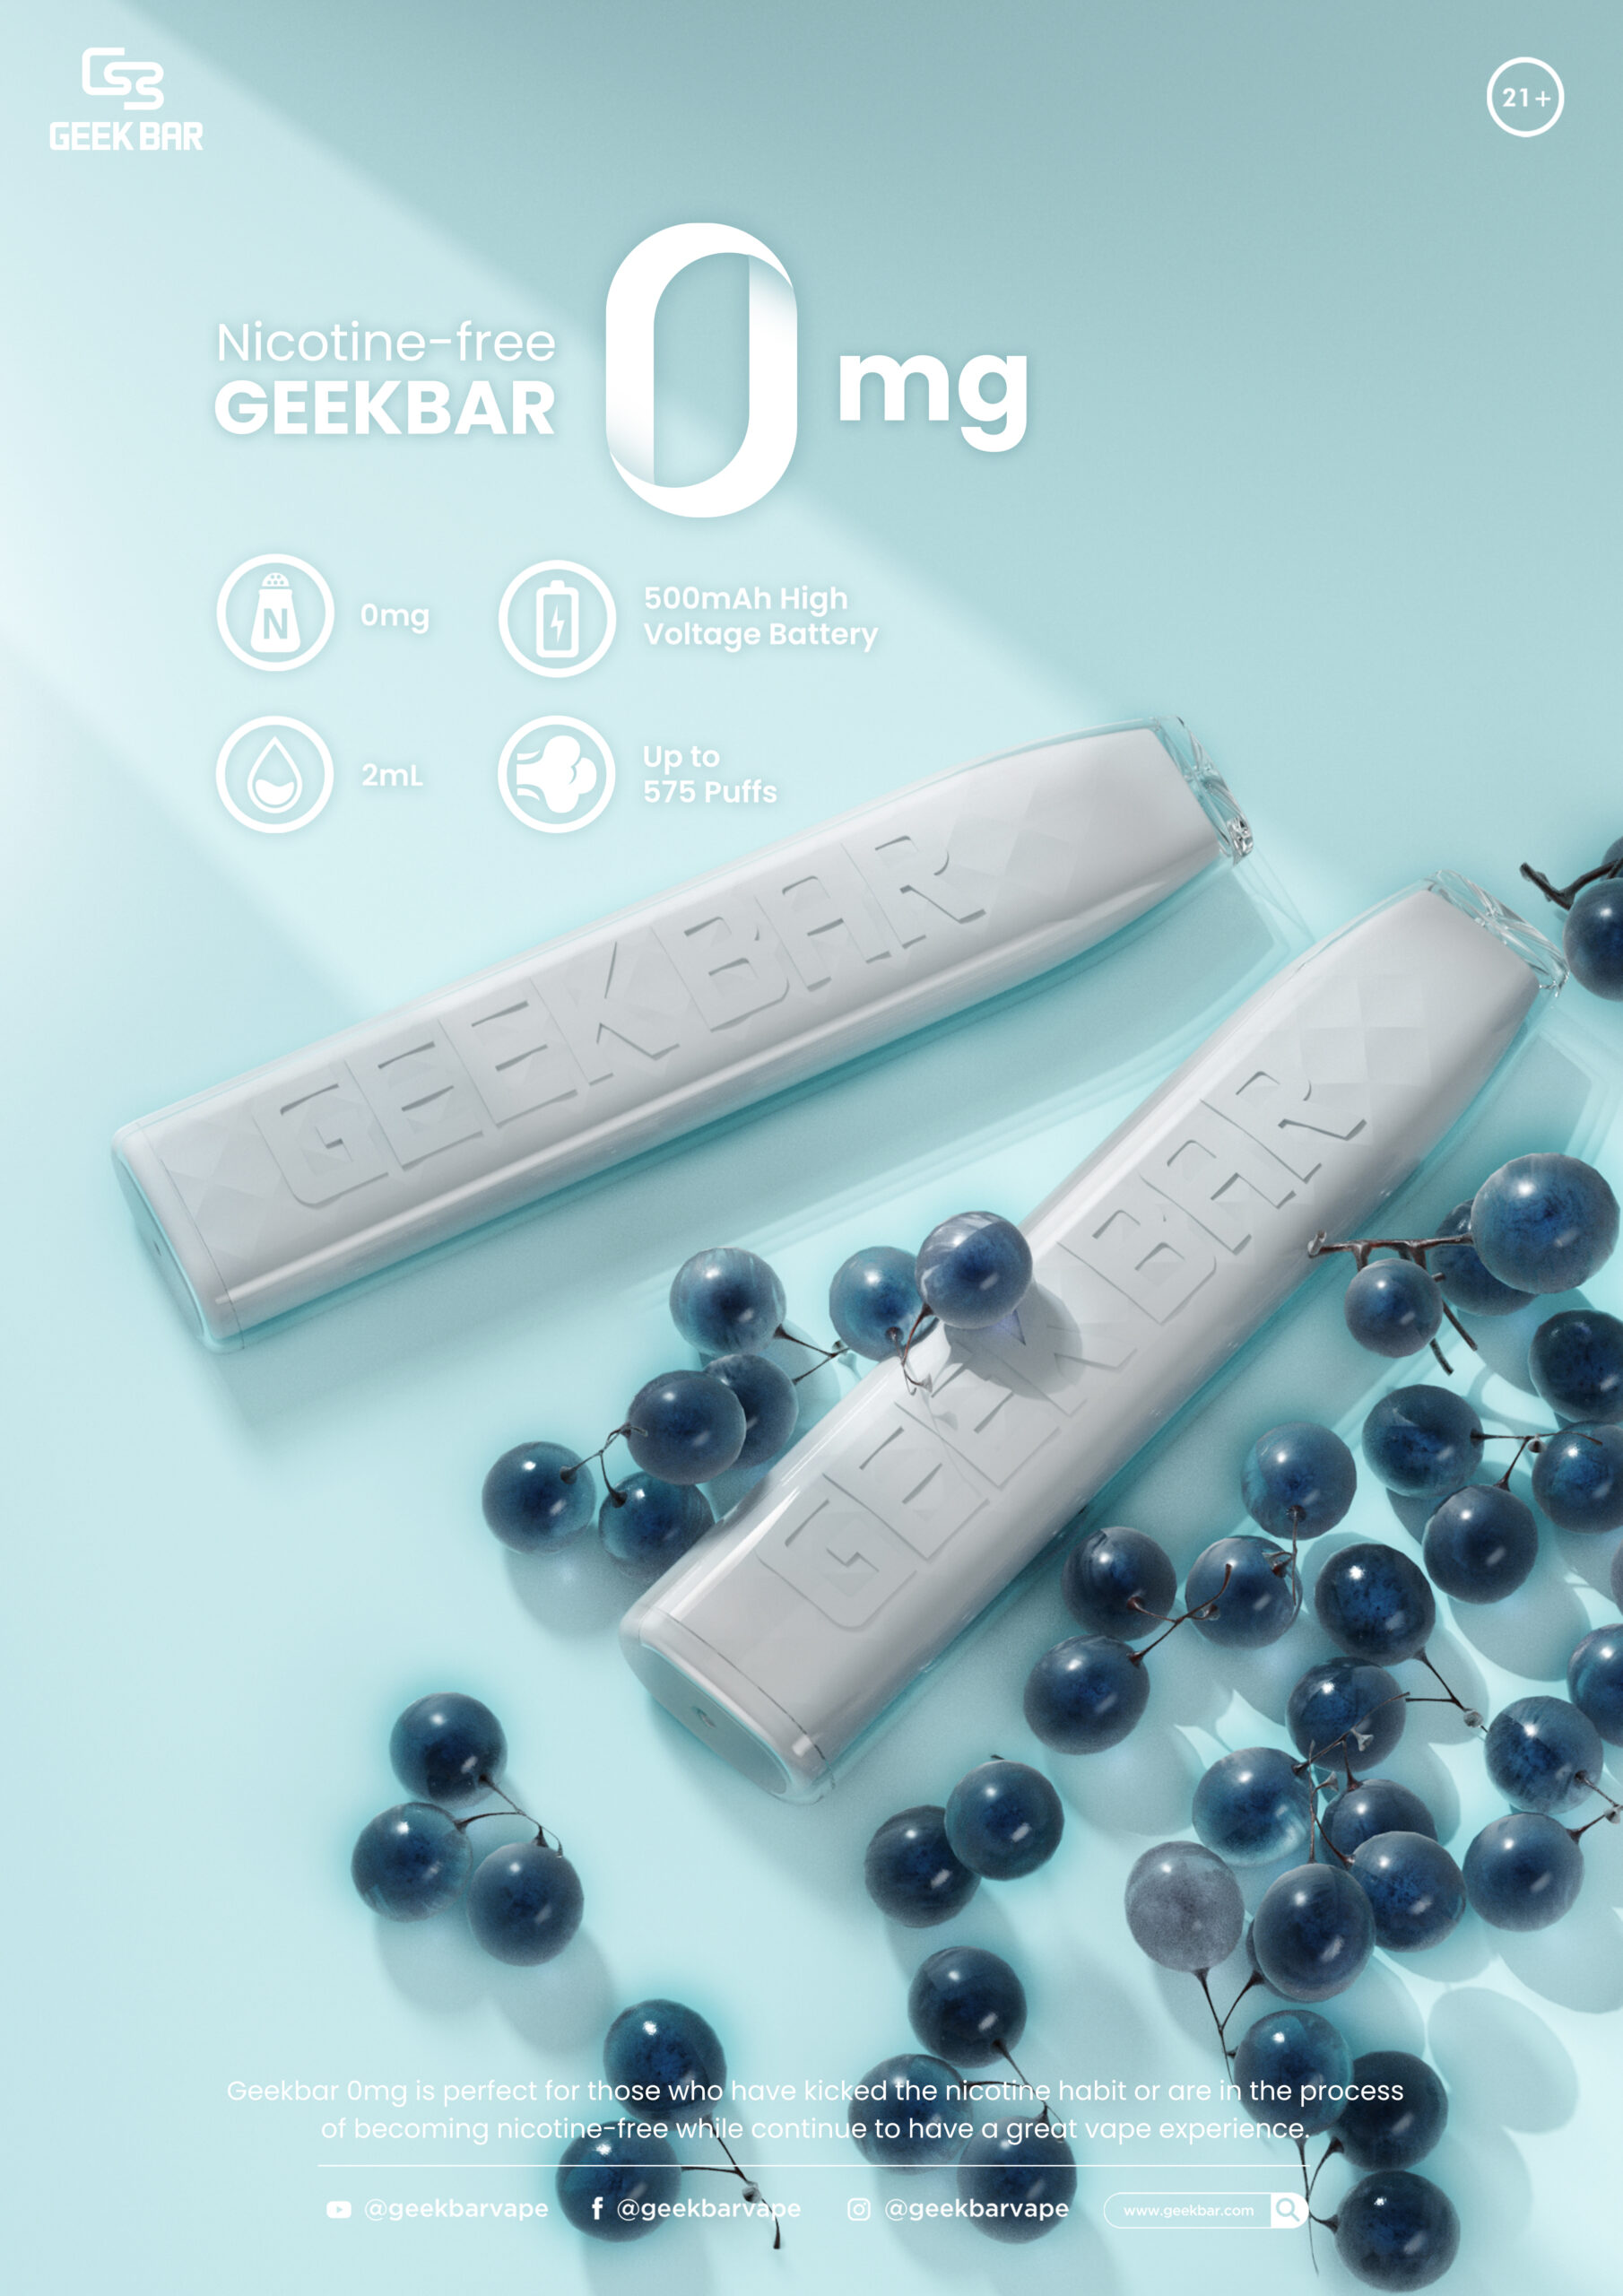 Geek Bar launches zero nicotine disposables